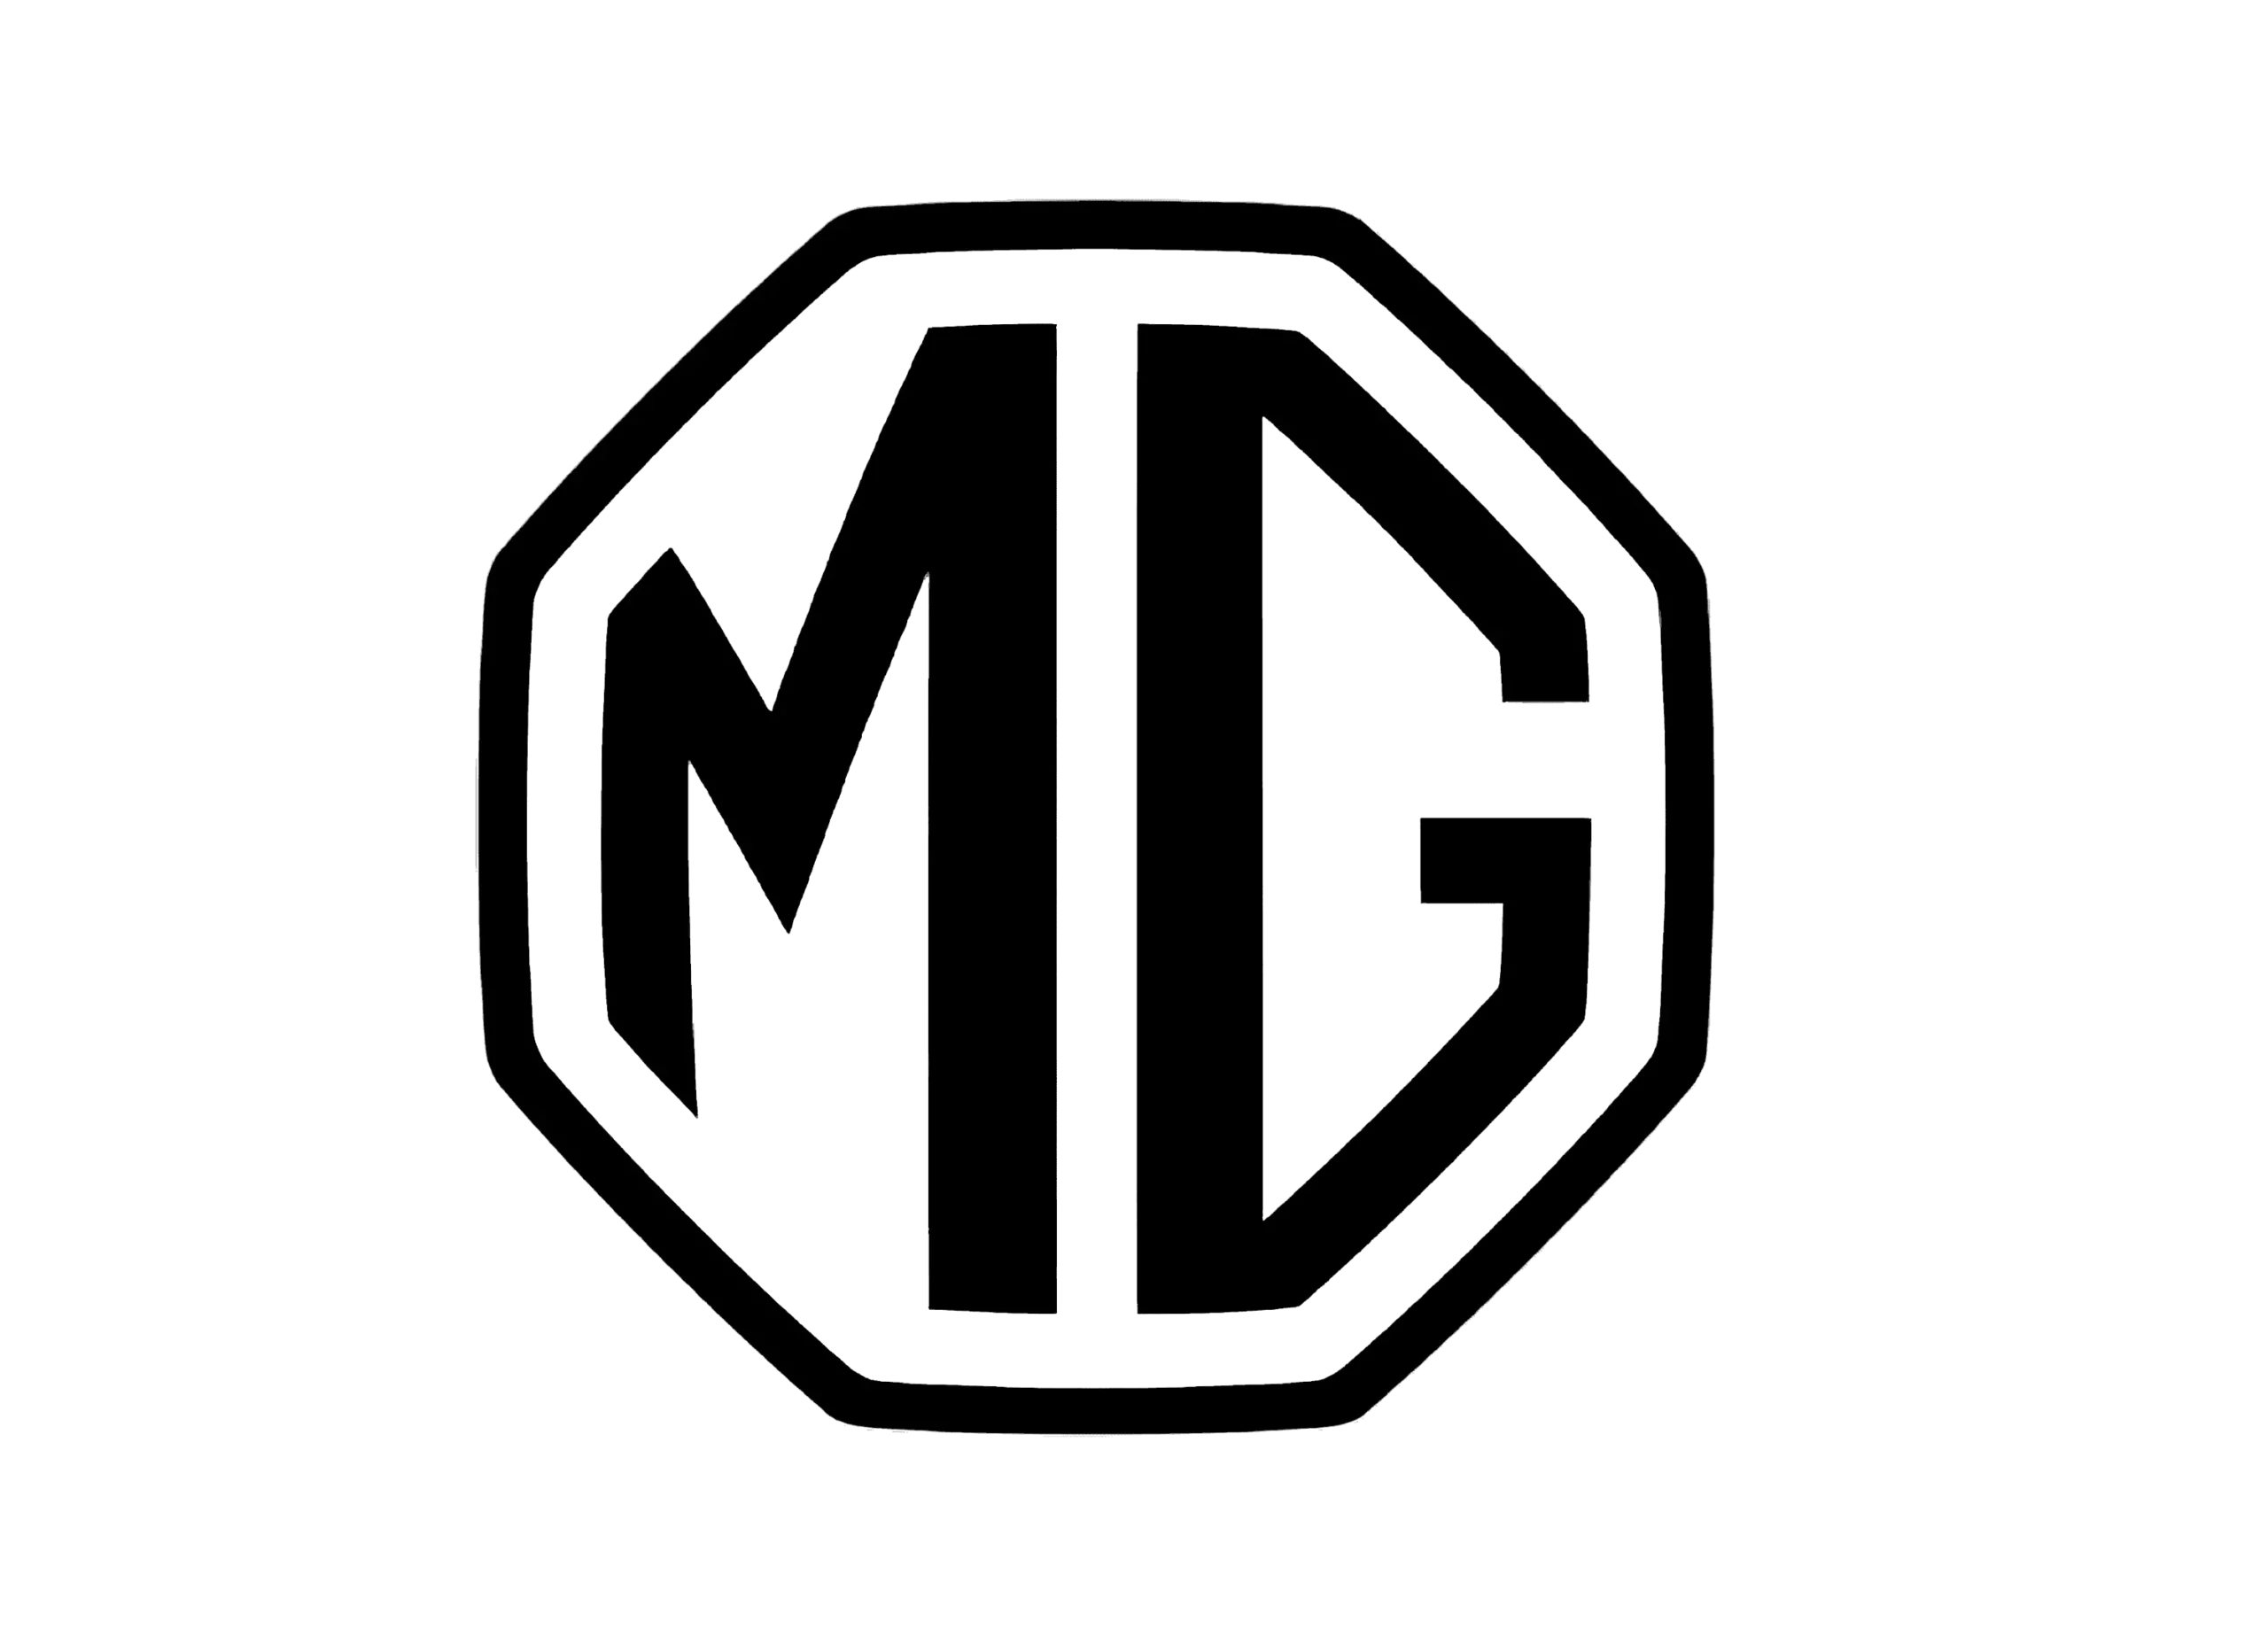 MG logo 2021-present